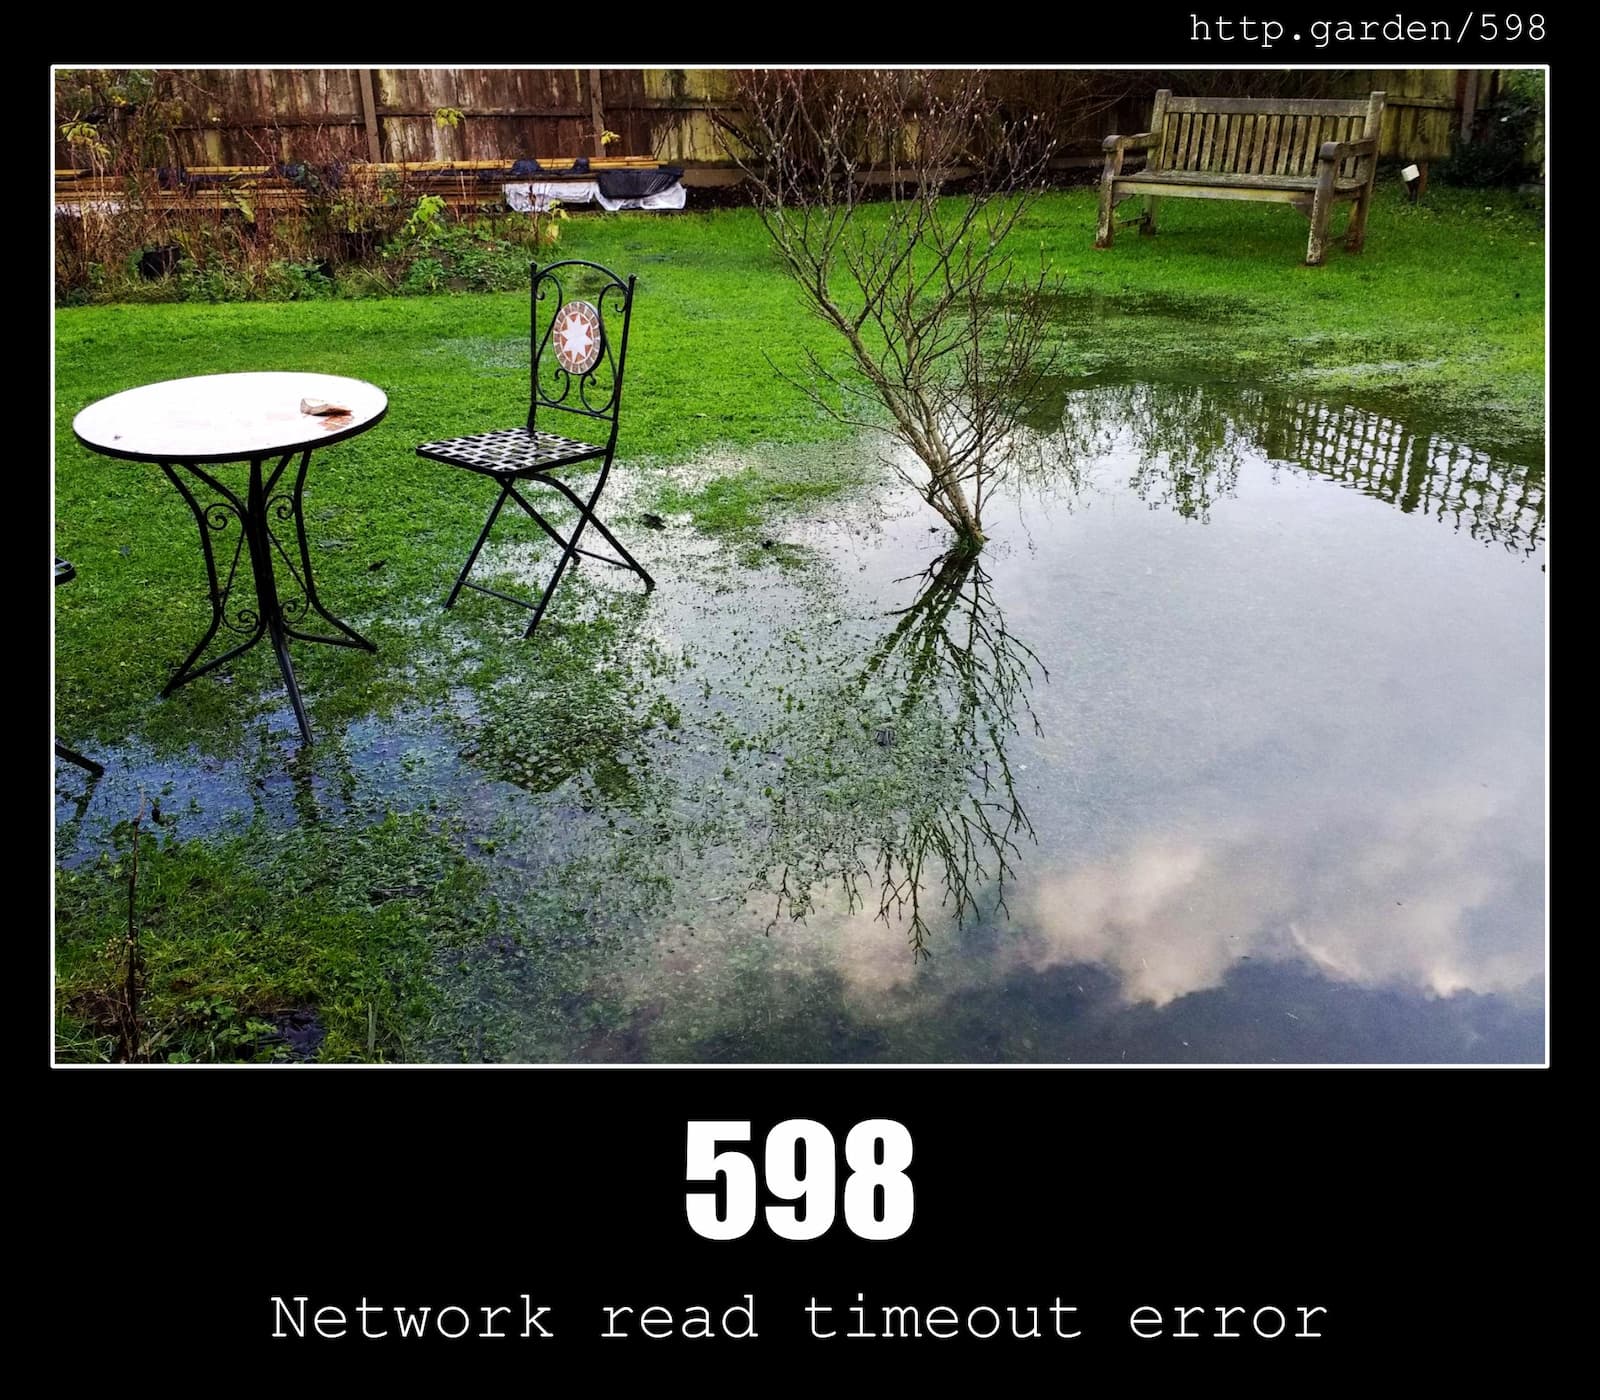 HTTP Status Code 598 Network read timeout error